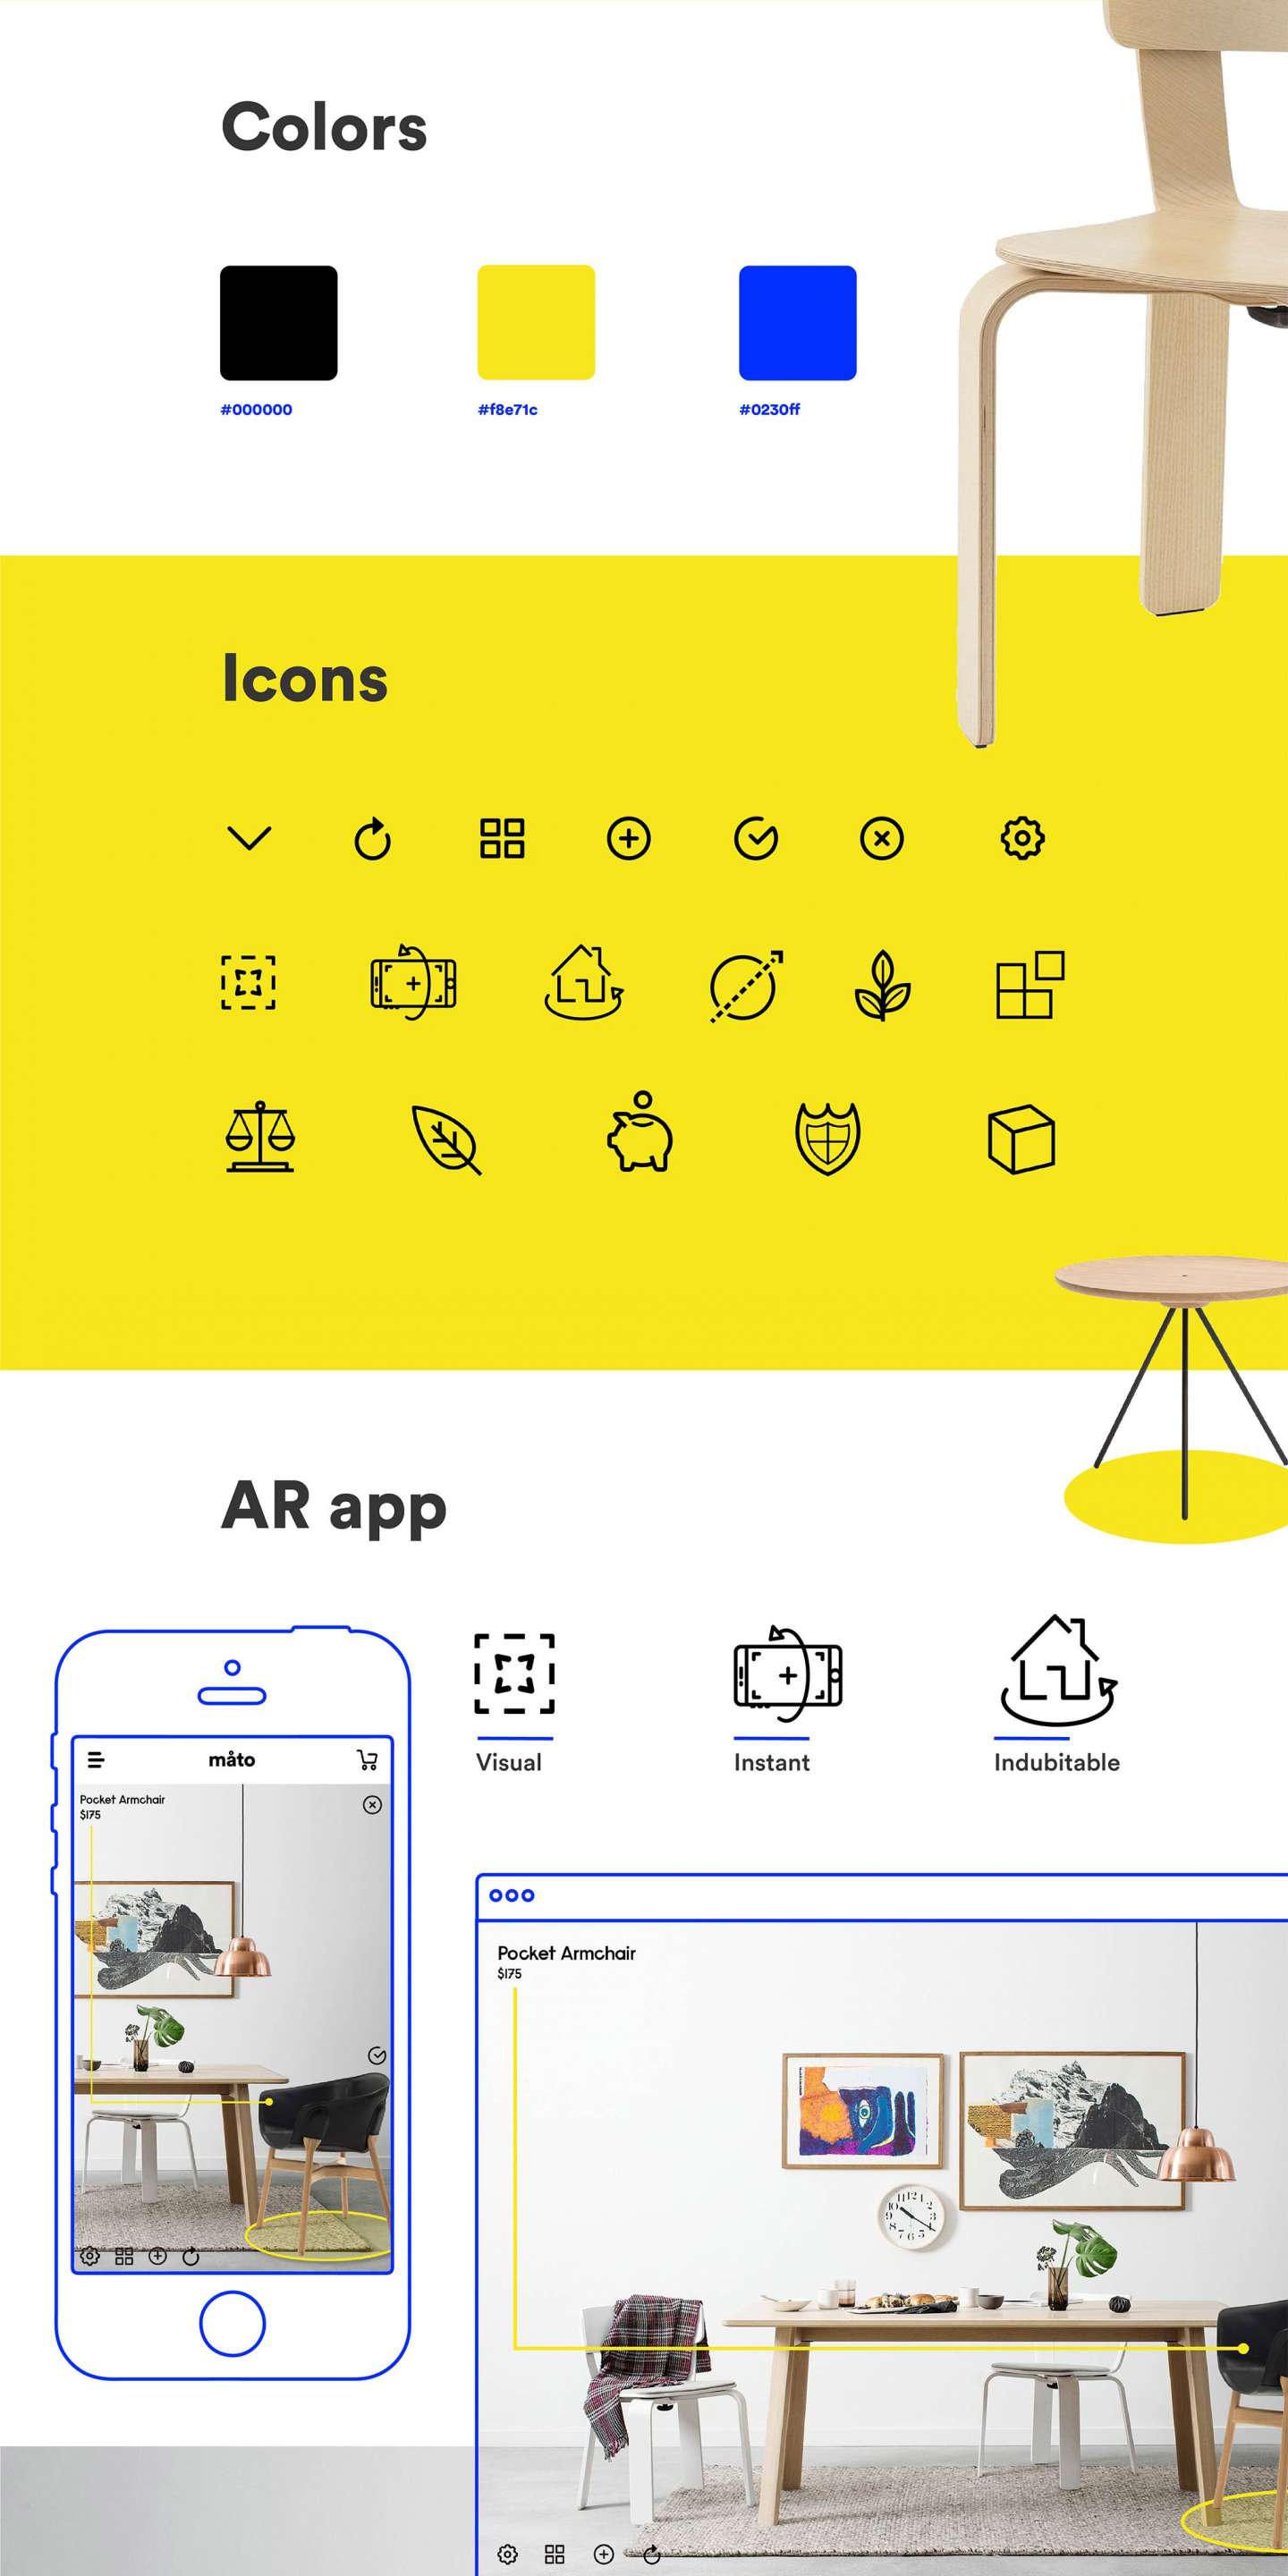 Måto — Furniture Brand & AR App